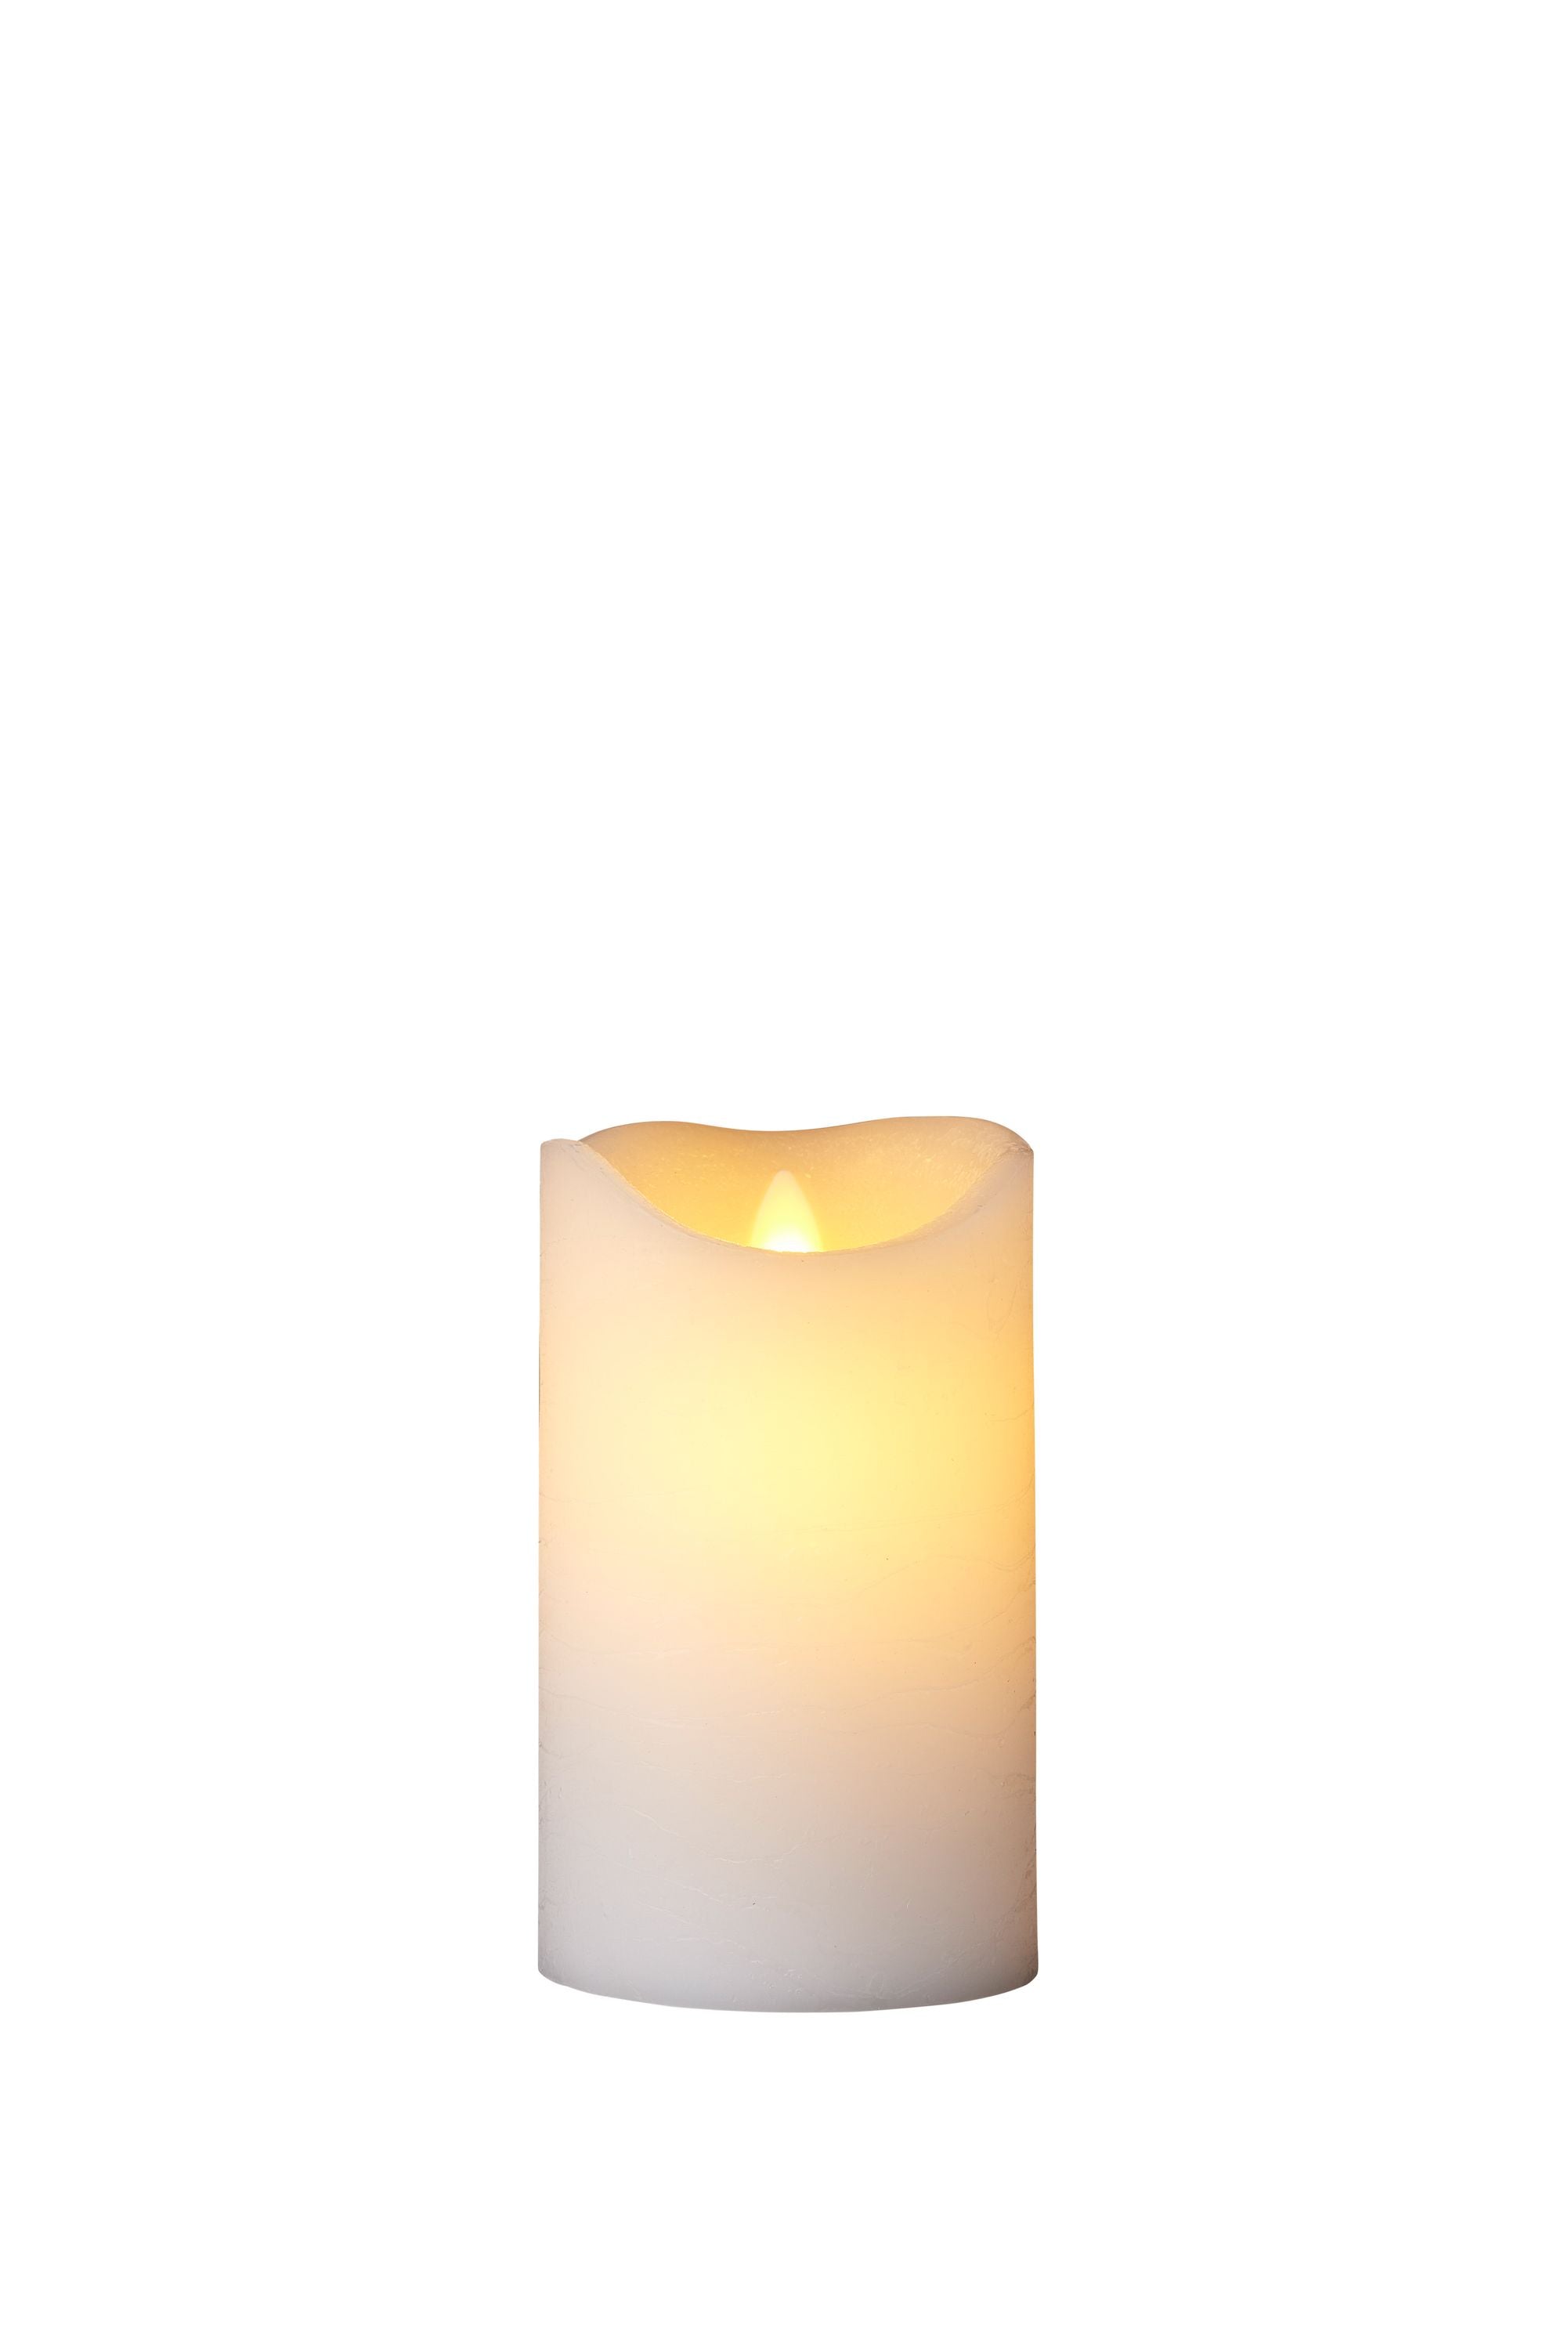 Sirius Sara oplaadbaar Led Candle White, Ø7,5x H12,5cm